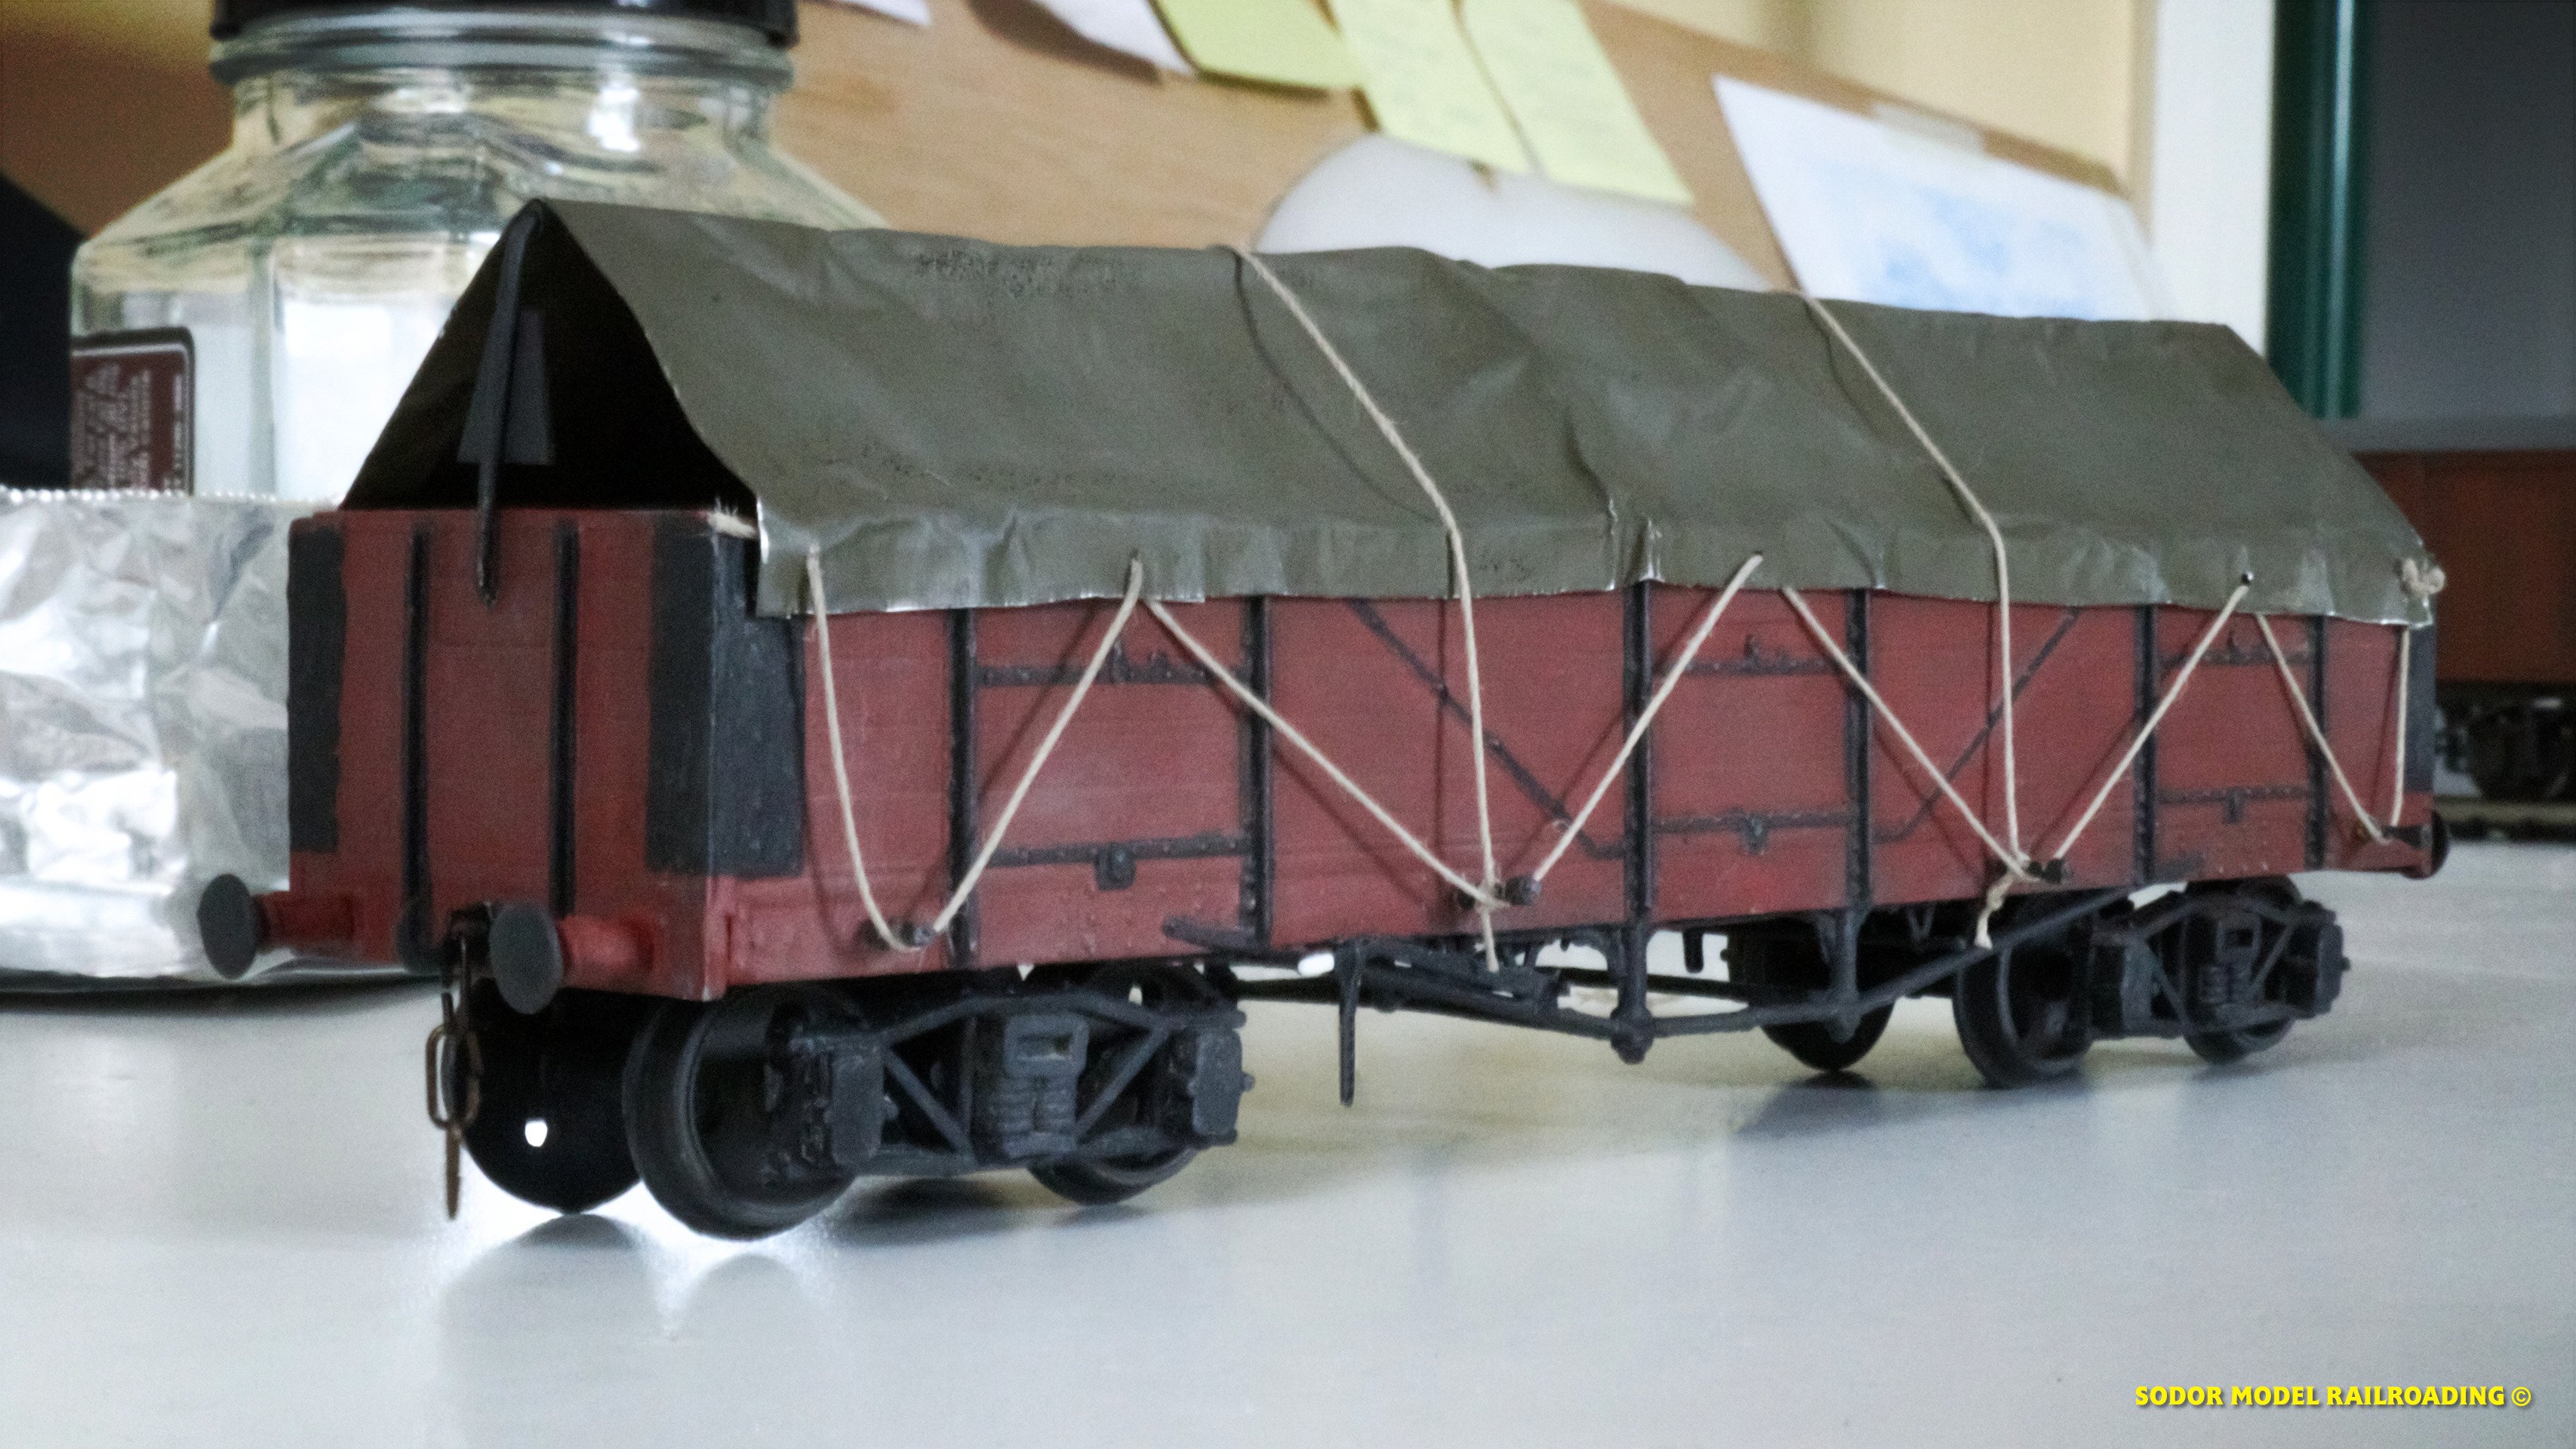 Second Life Marketplace - Midland Railway loco coal wagon D204